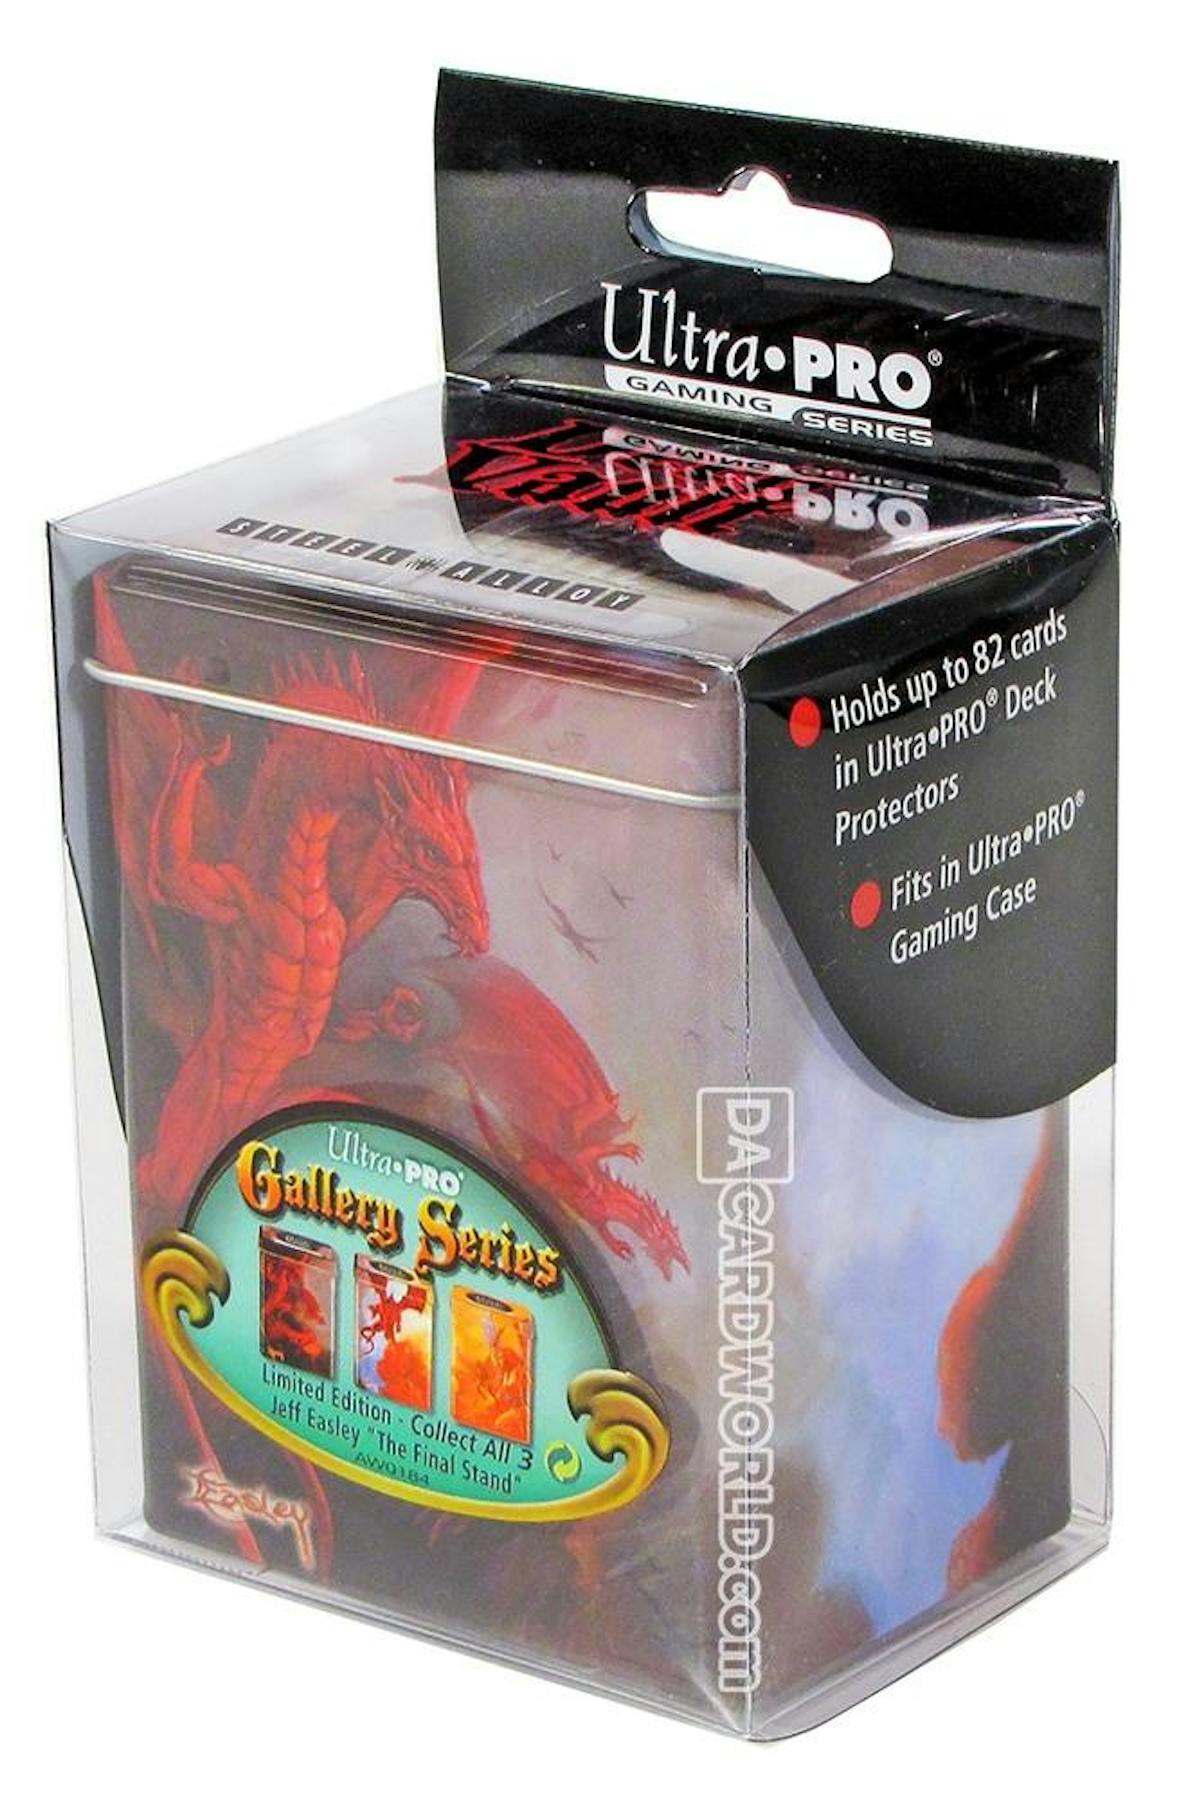 Ultra Pro Gallery Series Easley Art - Deck Vault & Protector Combo